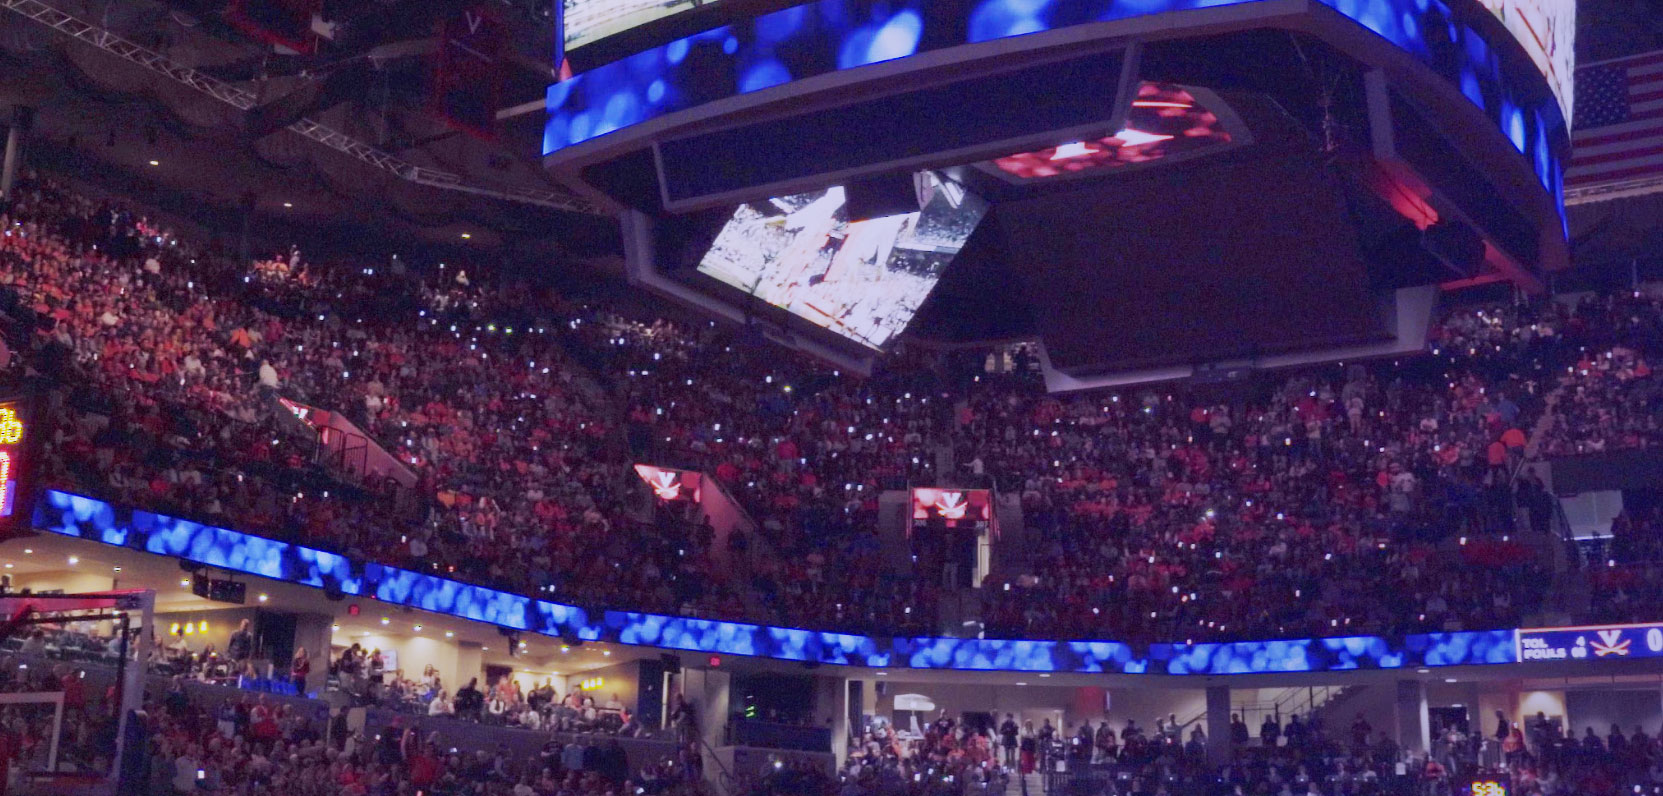 UVA Mobile Light Show Delights Thousands of Fans